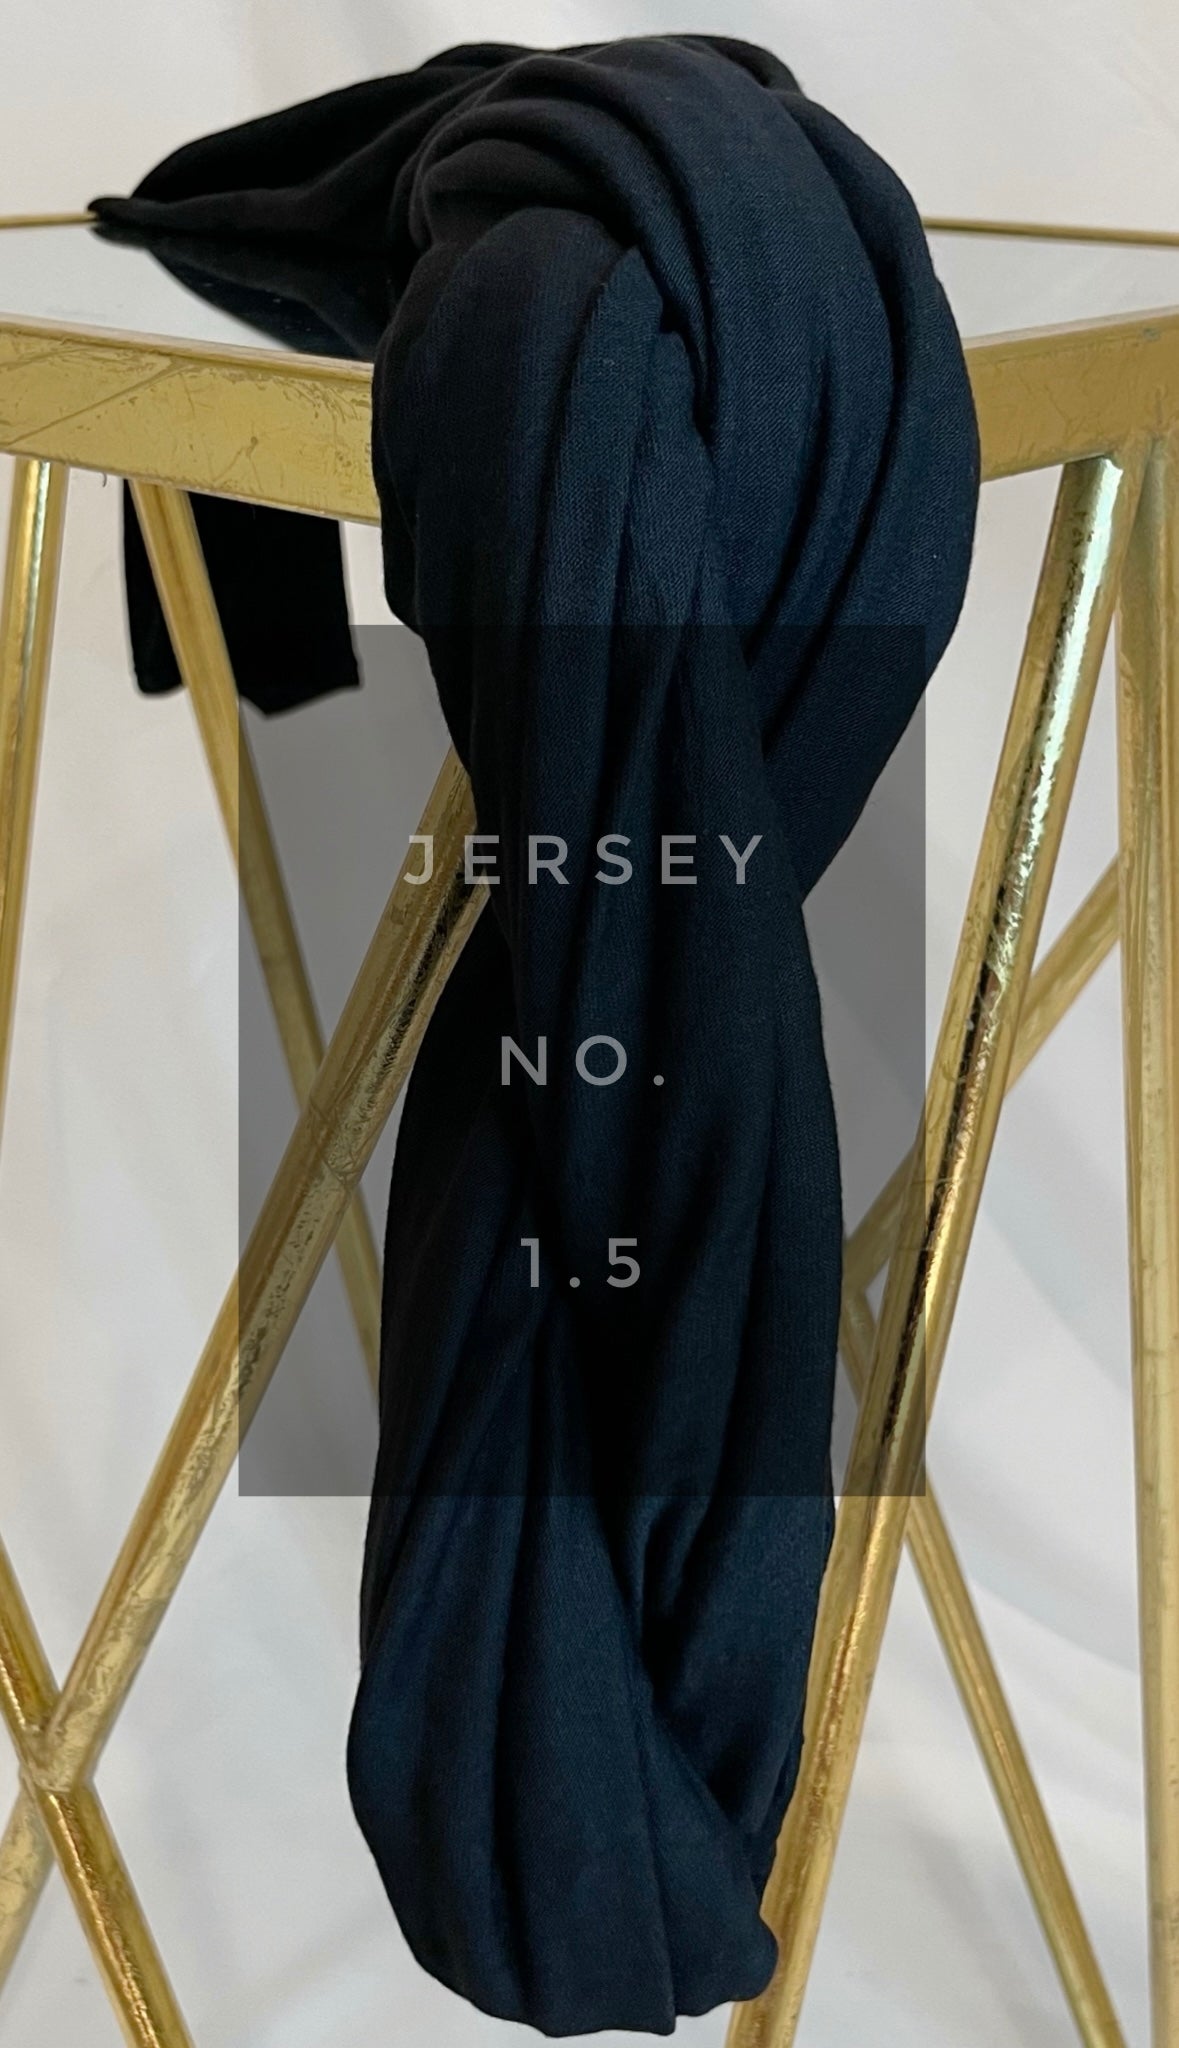 Jersey No. 1.5